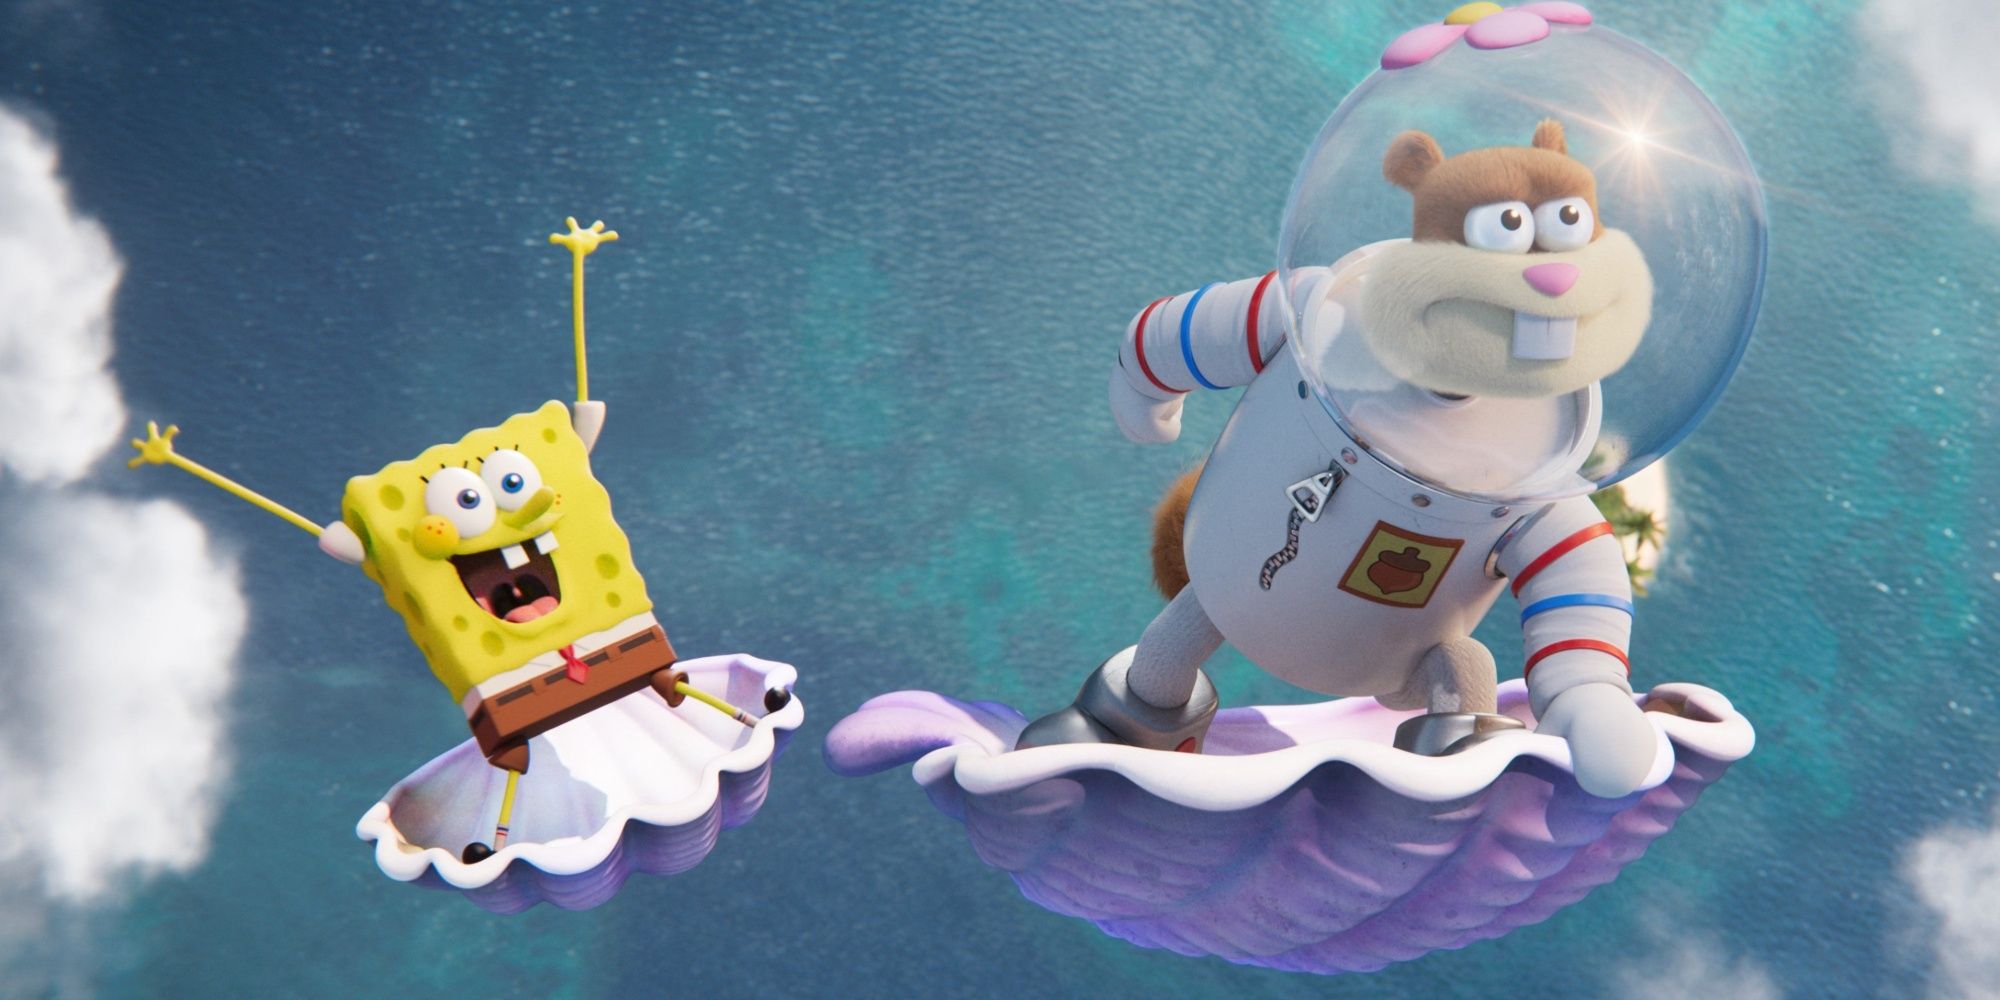 SpongeBob SquarePants and Sandy Cheeks in Saving Bikini Bottom: The Sandy Cheeks Movie